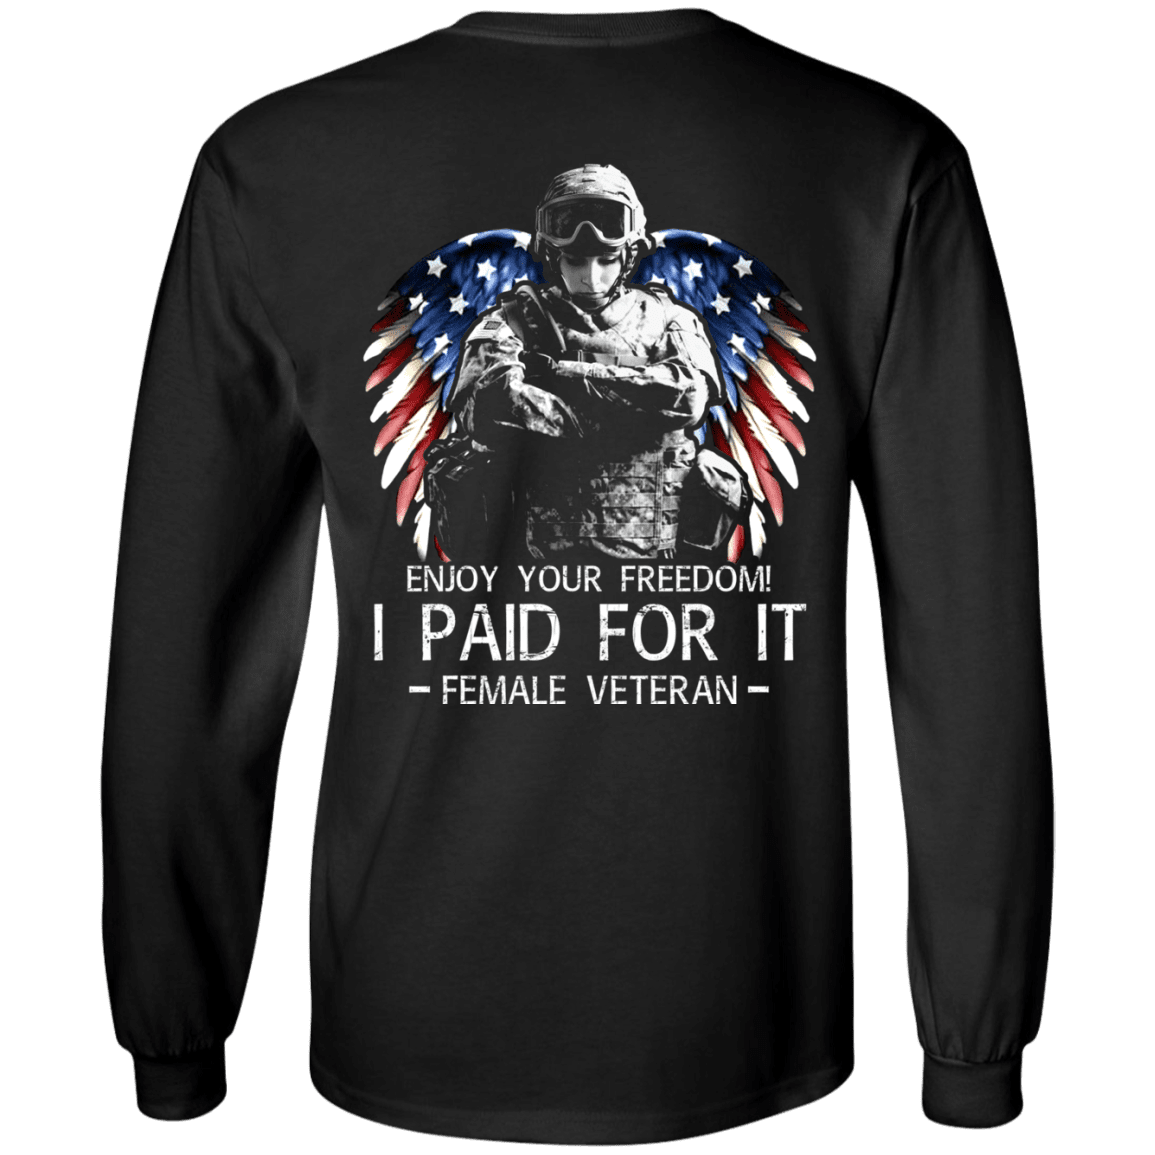 Military T-Shirt "Female Veteran - Enjoy your freedom I paid for it Women Back"-TShirt-General-Veterans Nation